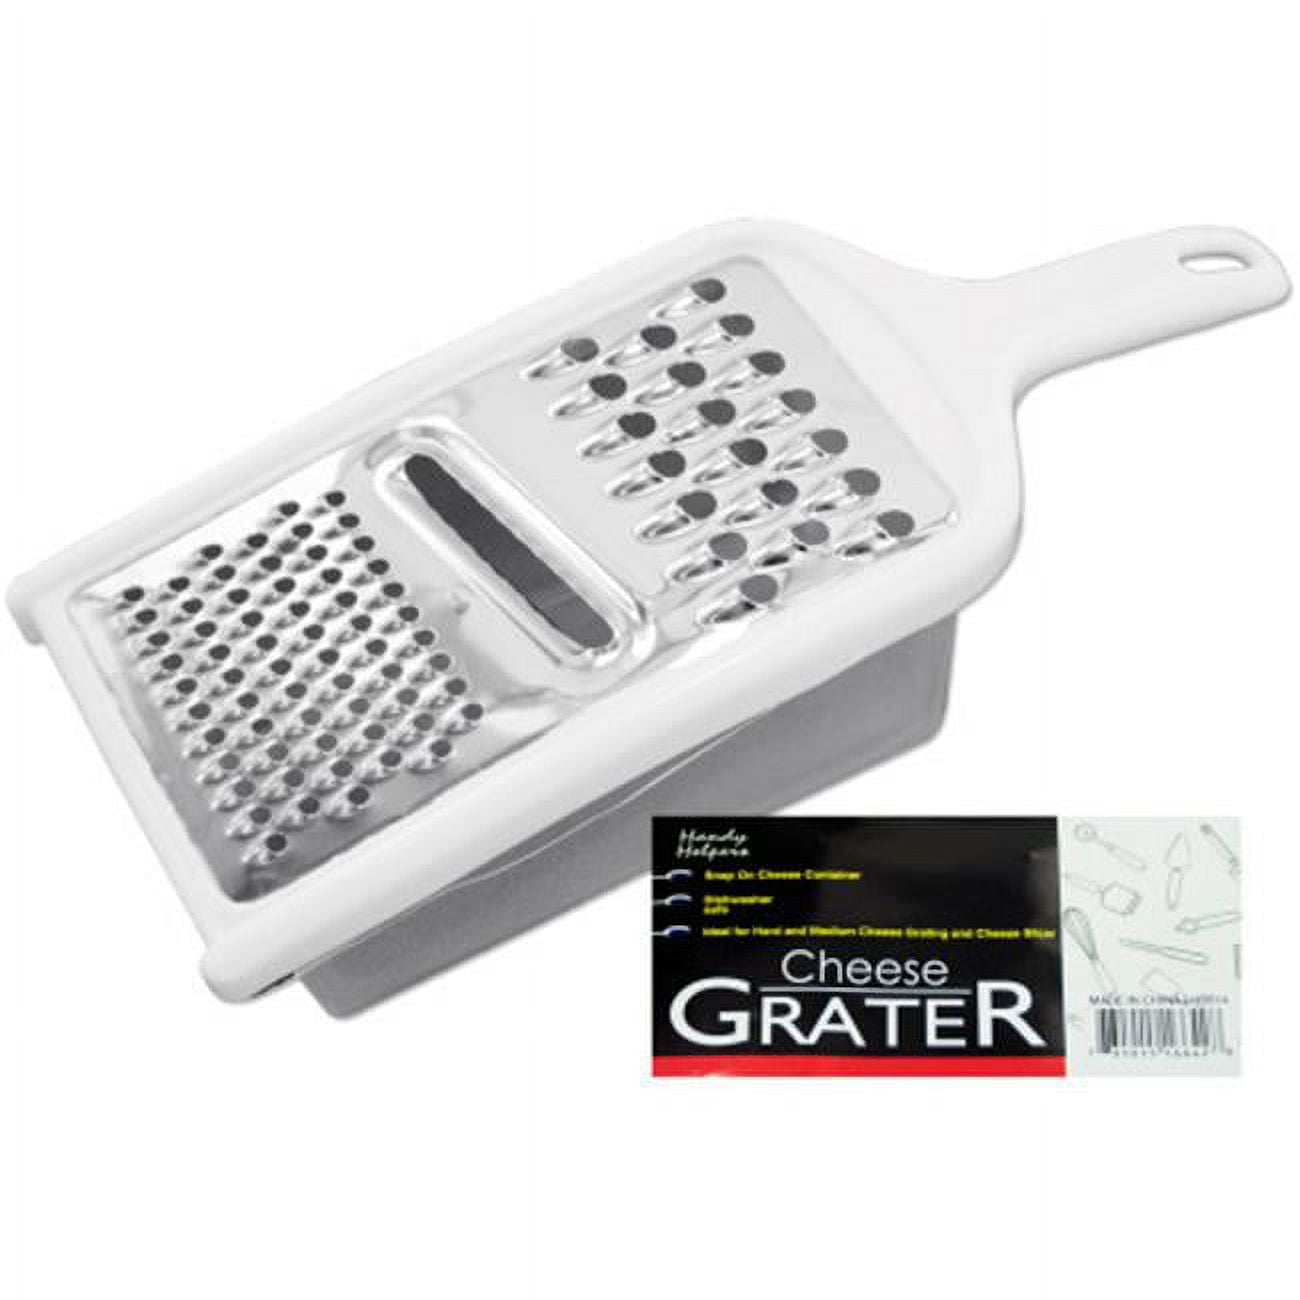 Soap grater